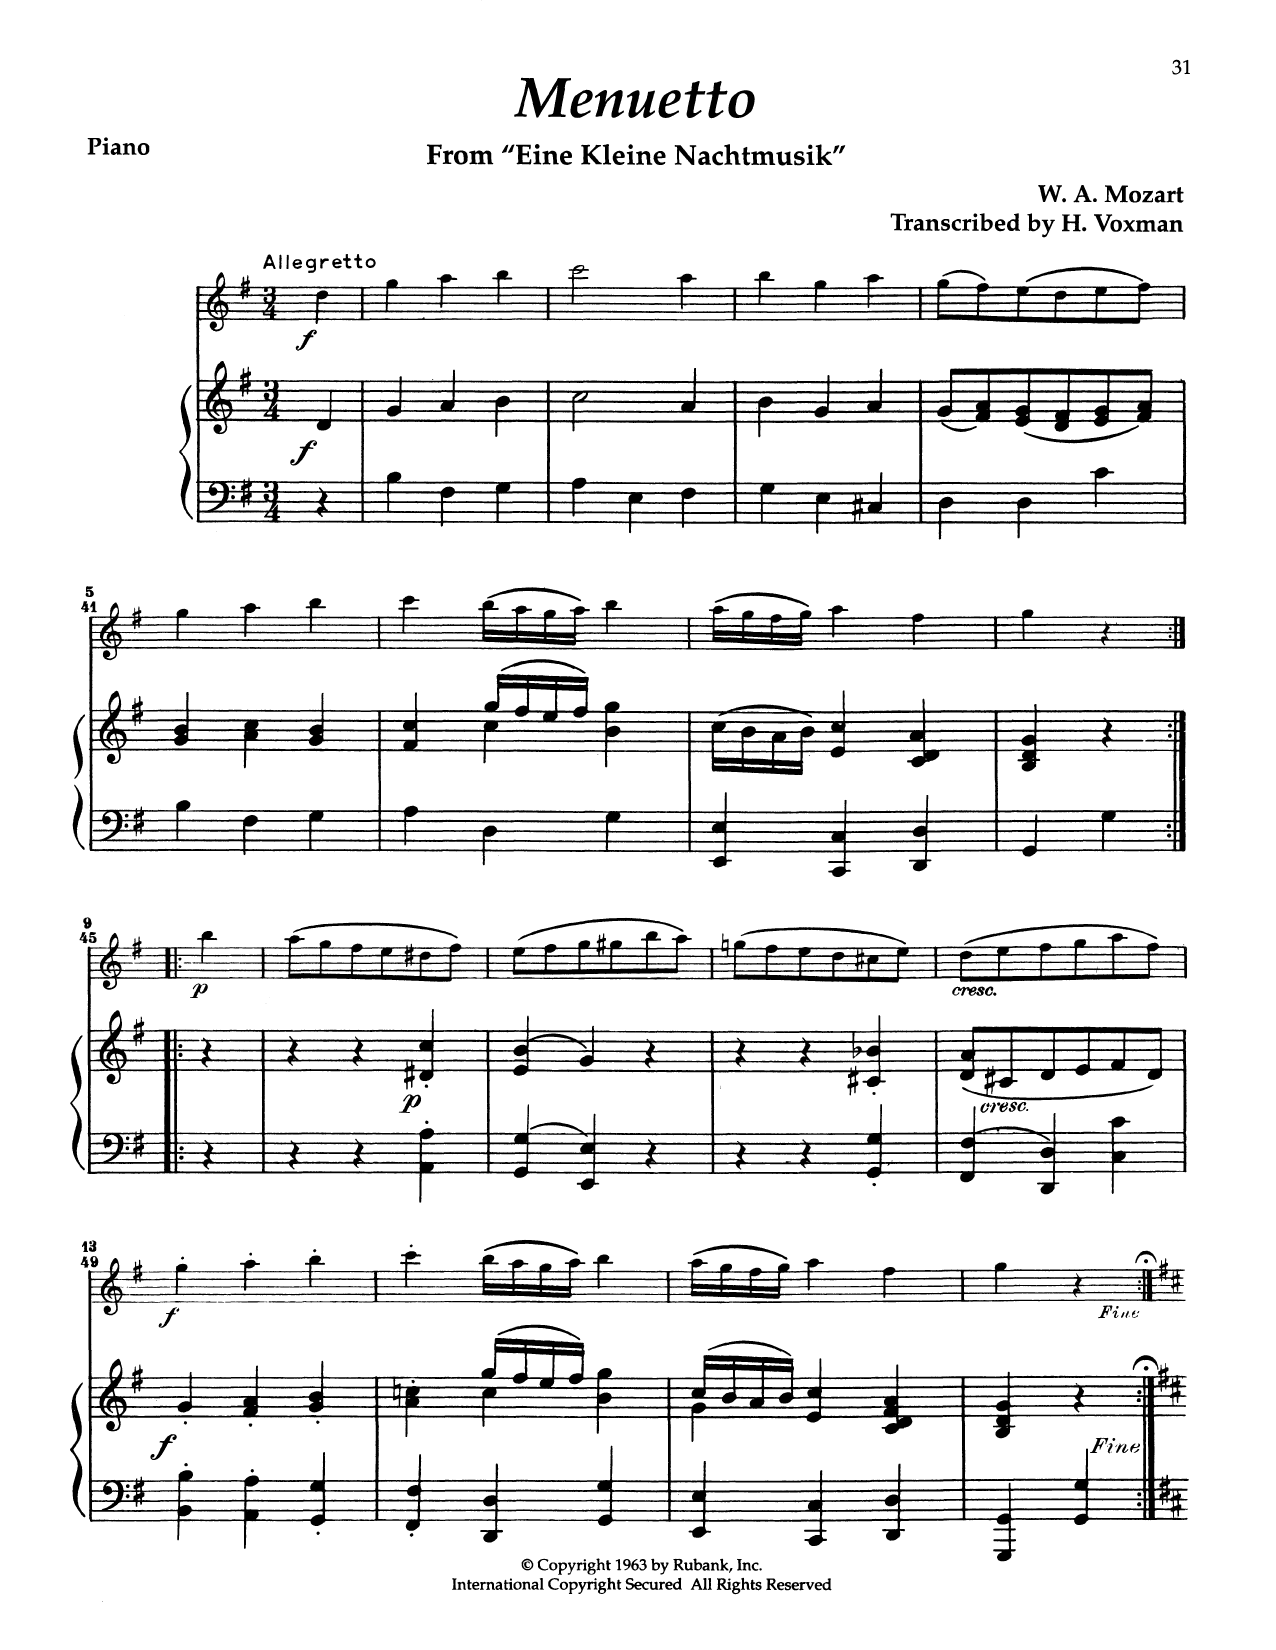 Wolfgang Amadeus Mozart Eine Kleine Nachtmusik, K. 525 Sheet Music Notes & Chords for Easy Guitar - Download or Print PDF